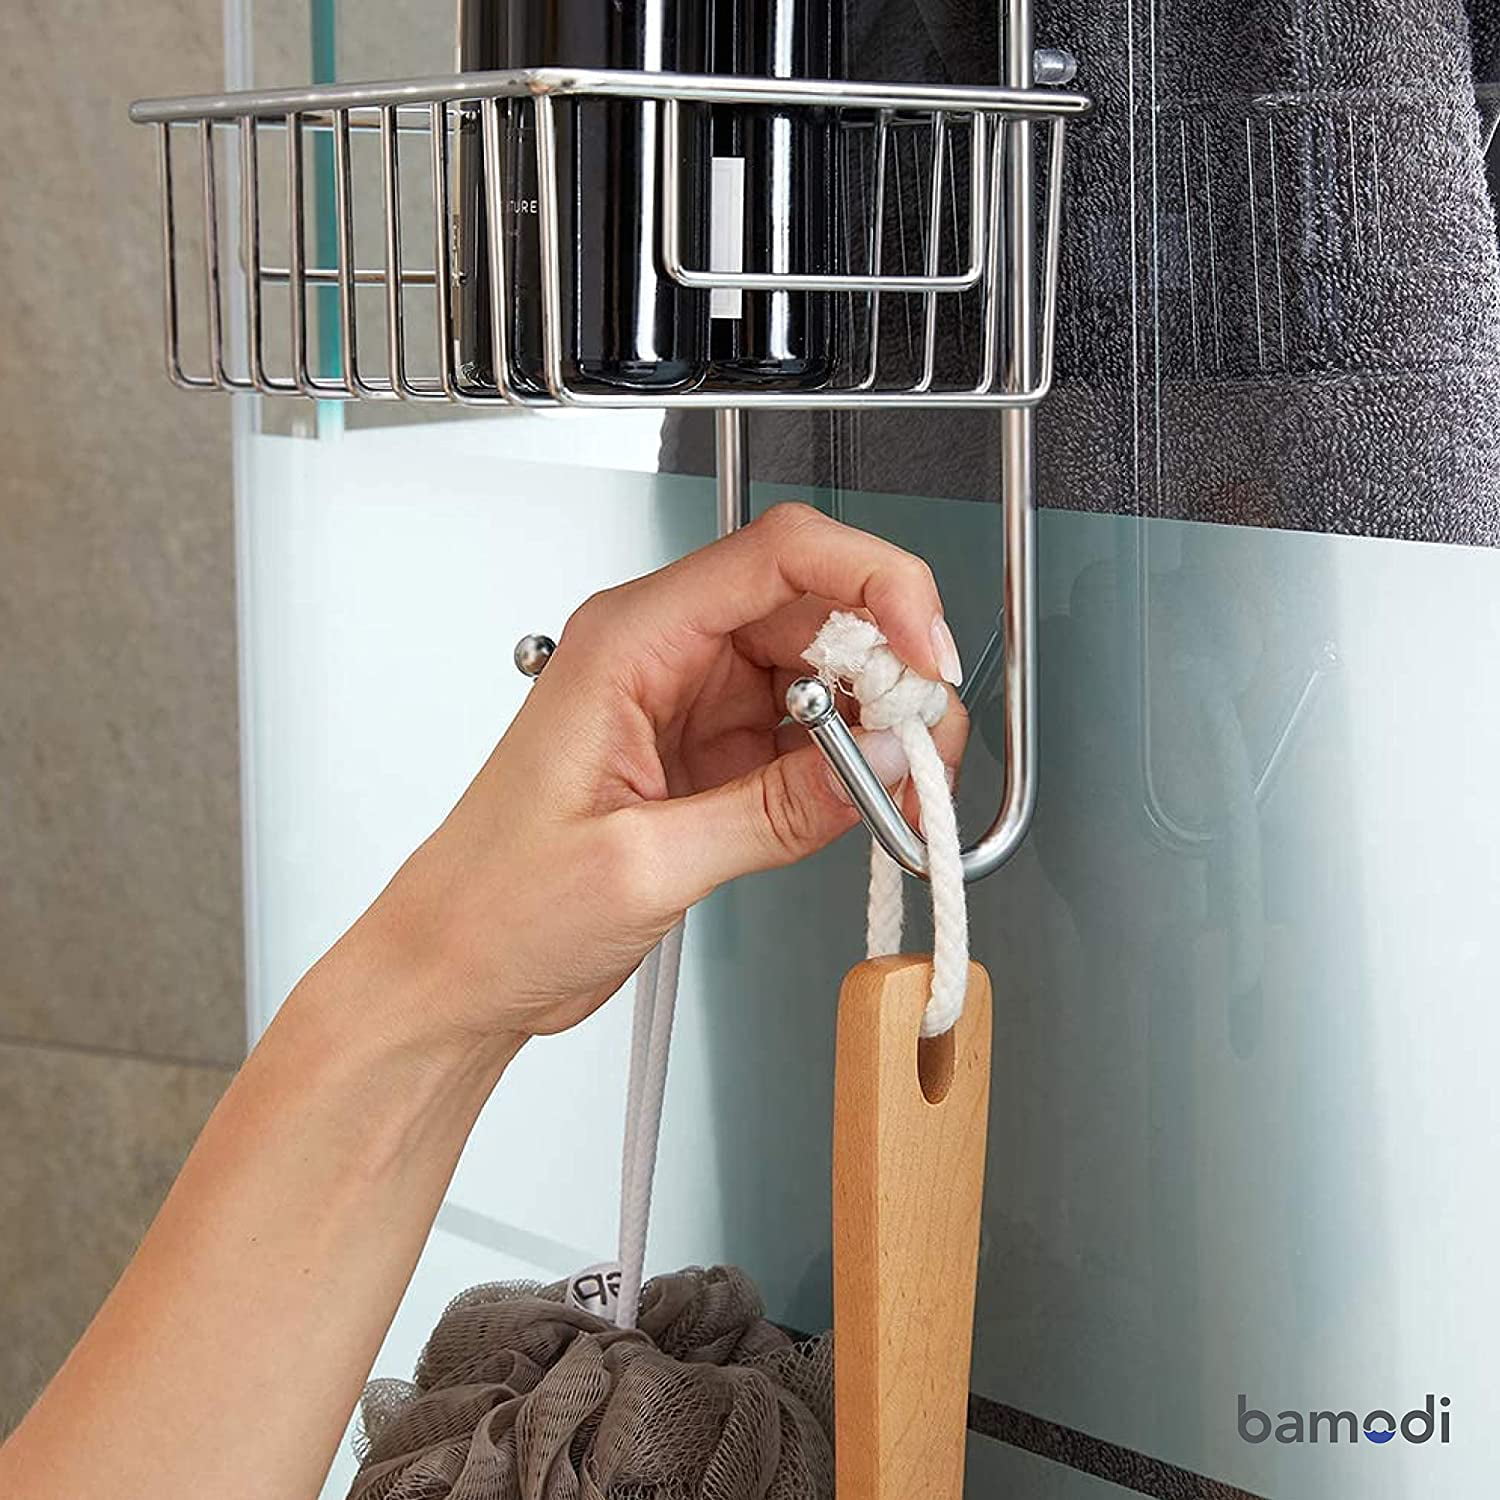 Splash Home Aluminum Kohala Shower Caddy Bathroom Hanging Head Two Basket Org... 